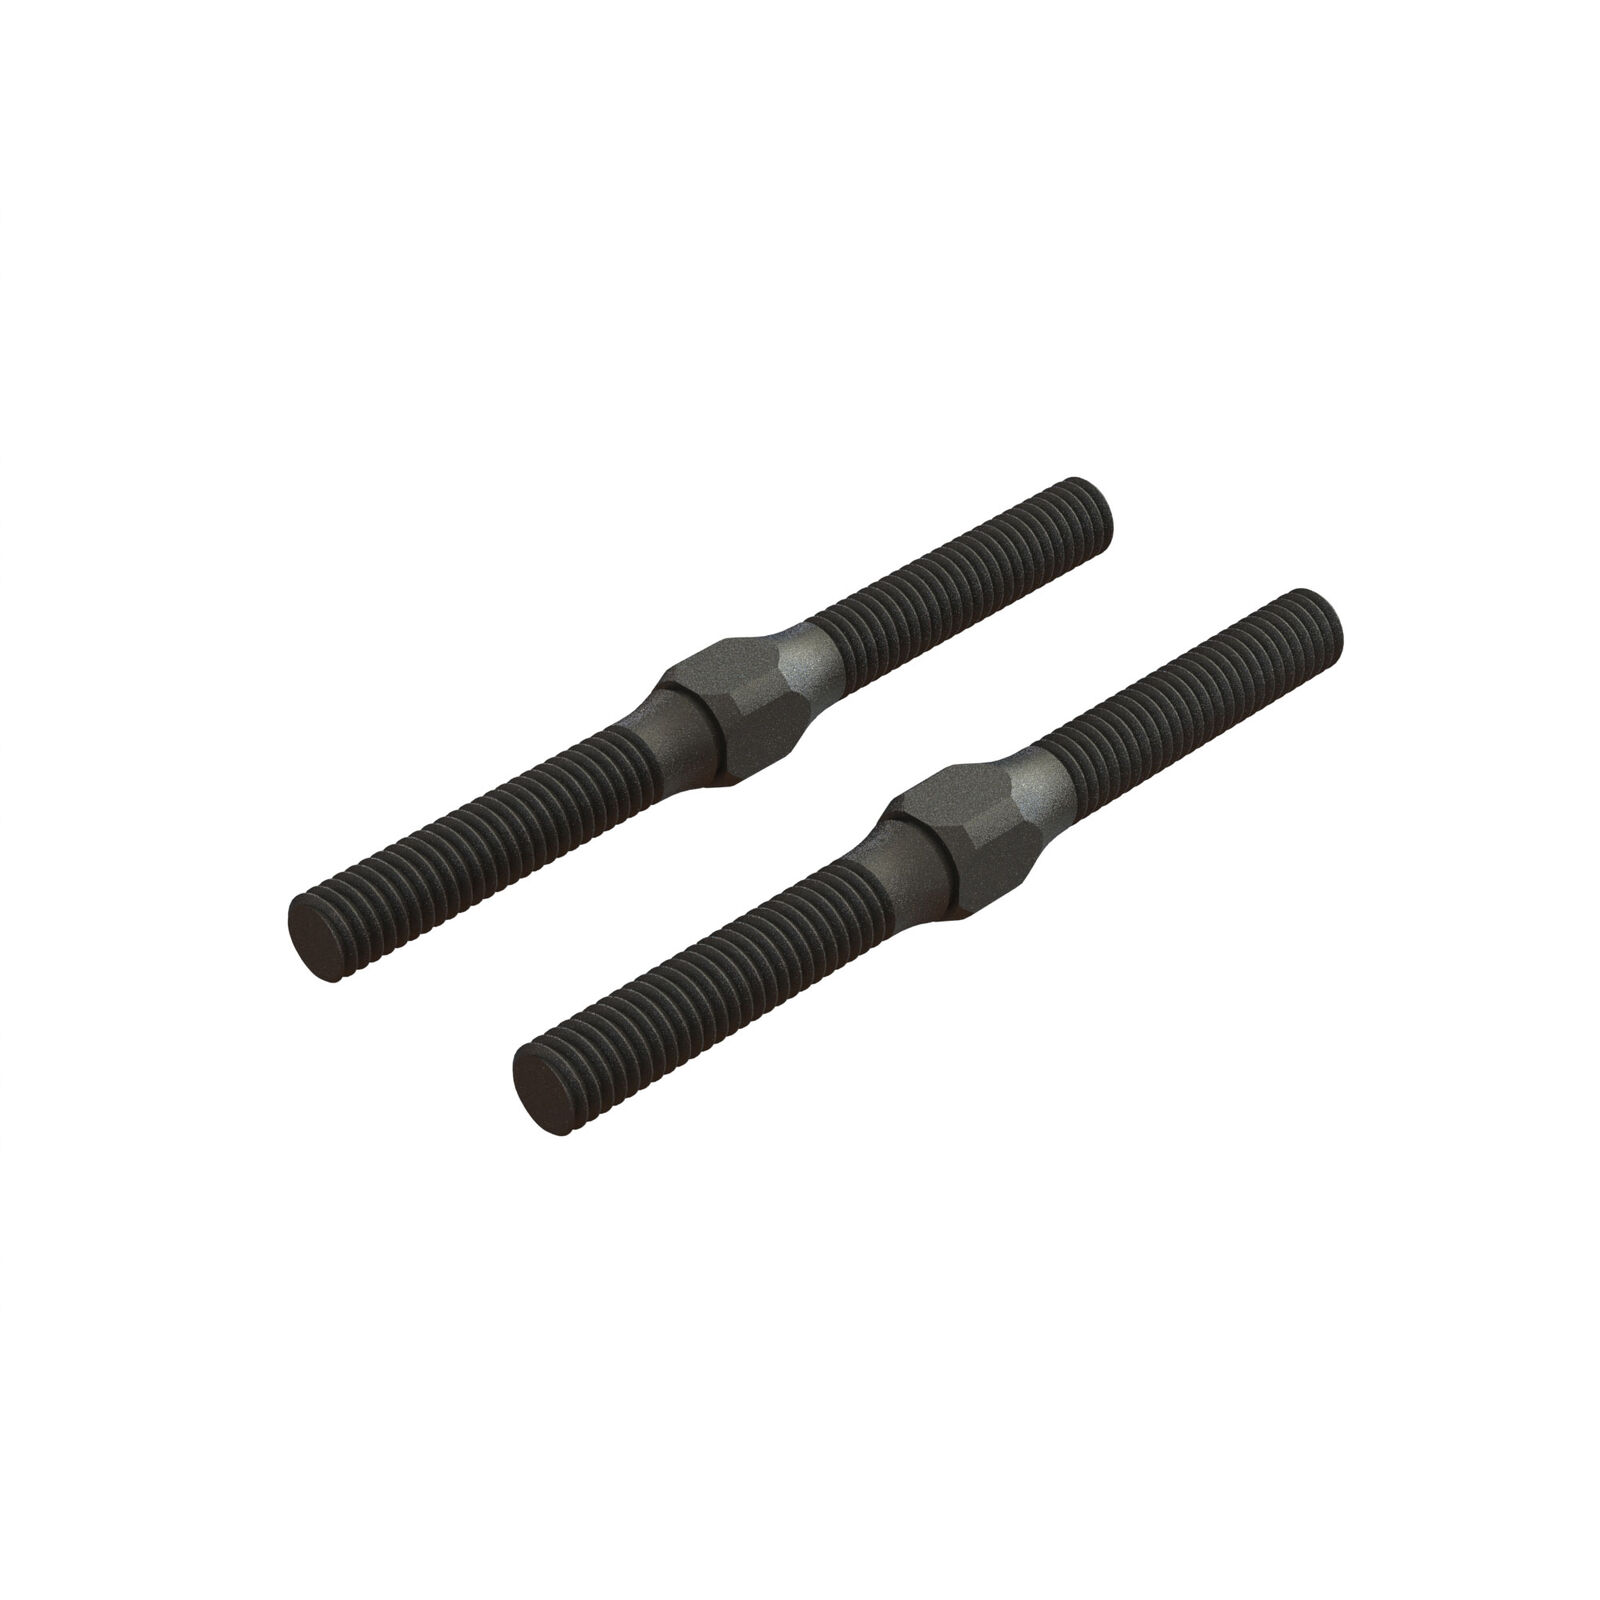 Steel Turnbuckle, M4 x 48mm, Black (2)